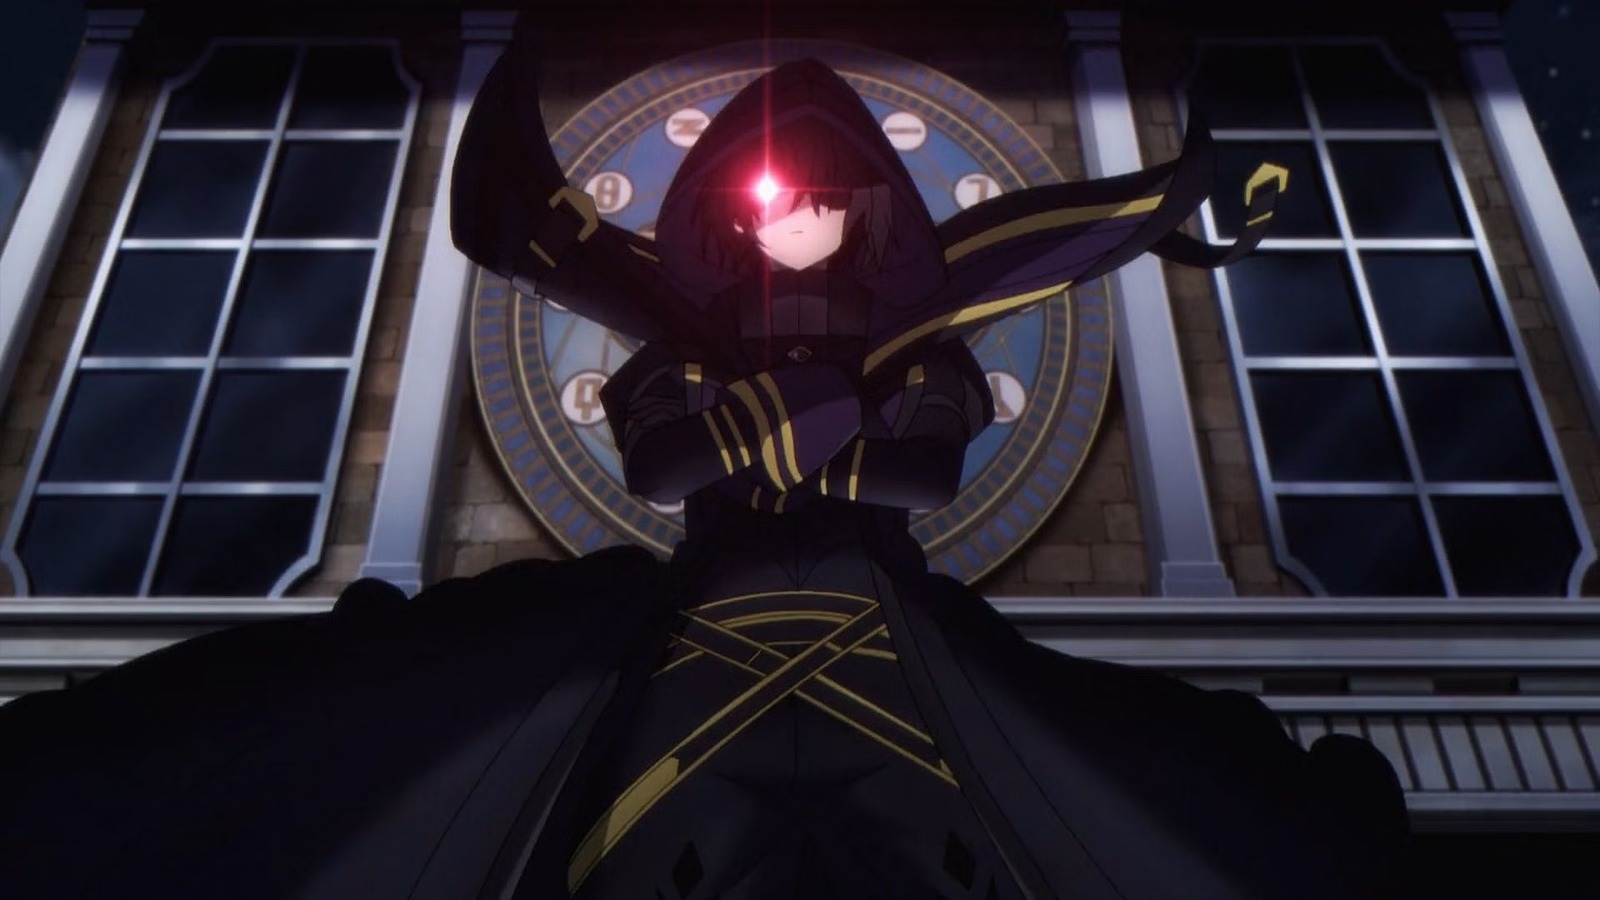 The Eminence in Shadow Season 2 Will Premiere in 2023, Exclusive Simulcast  on HIDIVE - Anime Corner